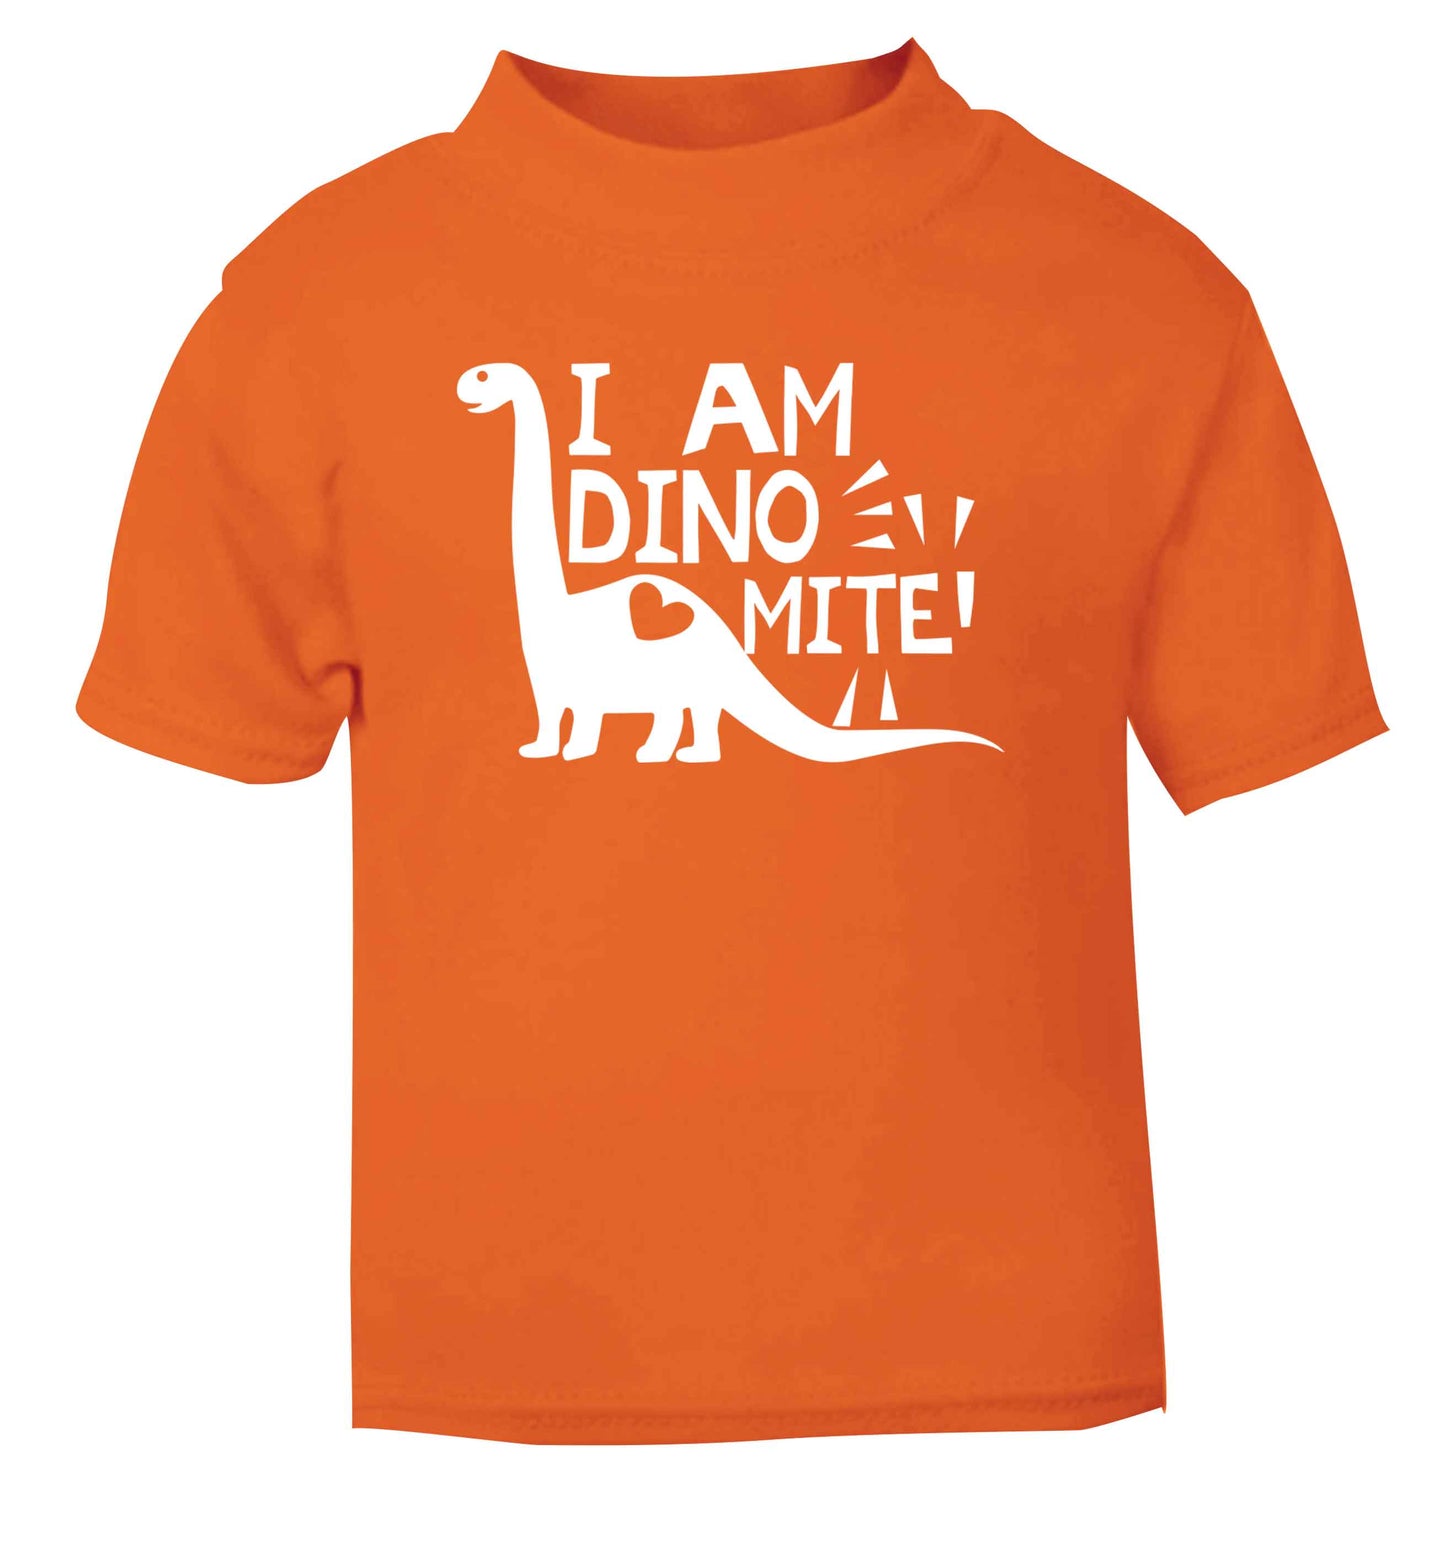 I am dinomite! orange Baby Toddler Tshirt 2 Years